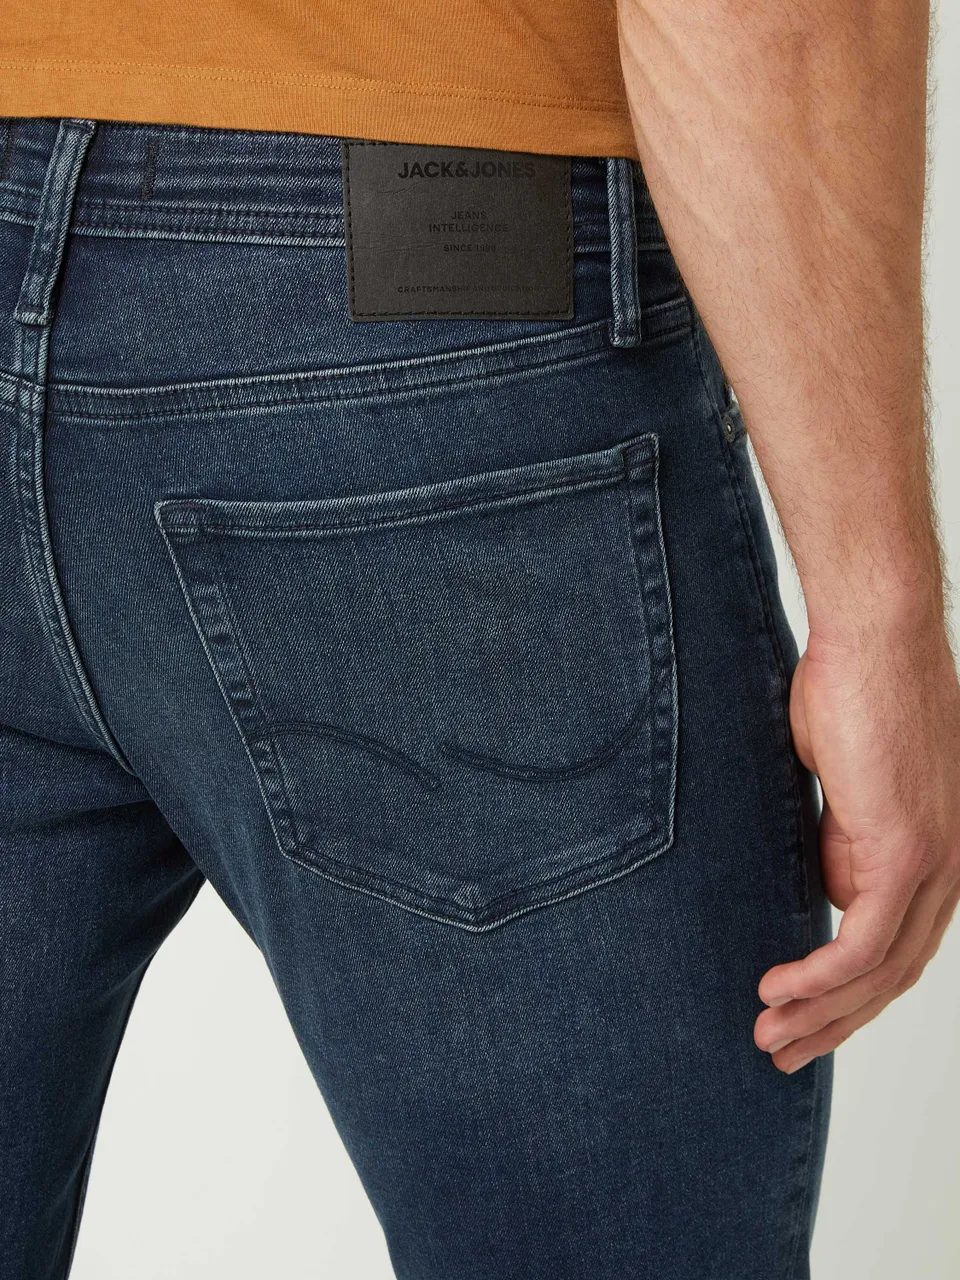 Slim Fit Jeans mit Stretch-Anteil Modell 'Glenn'